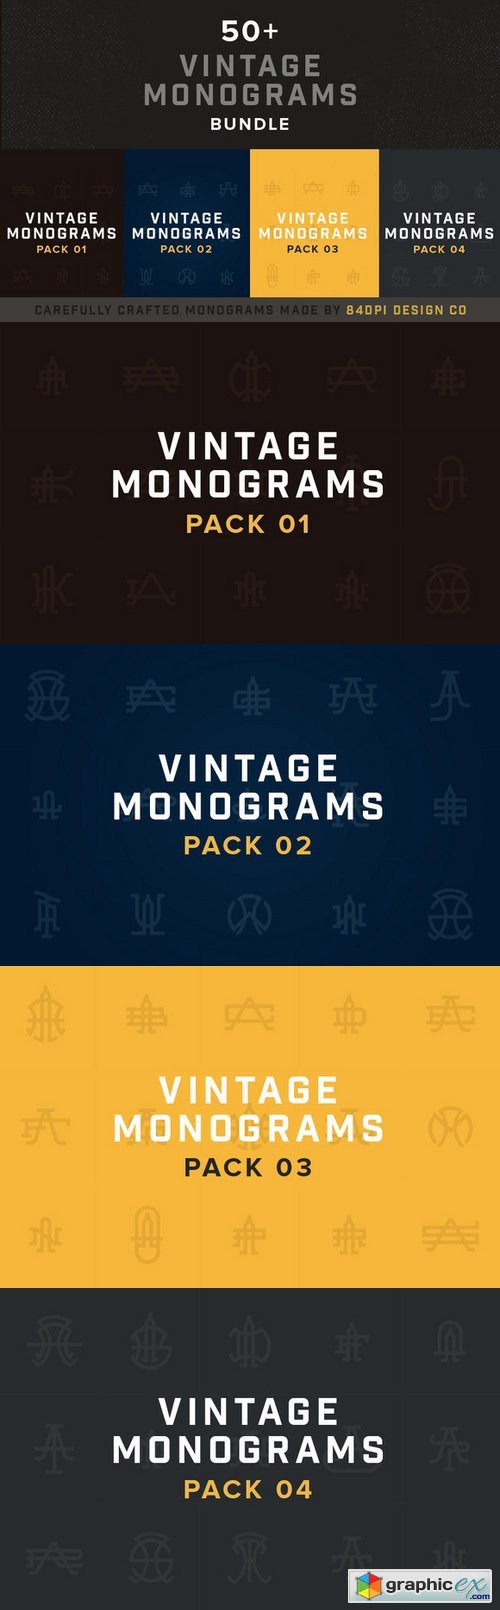 50+ Vintage Monograms Bundle